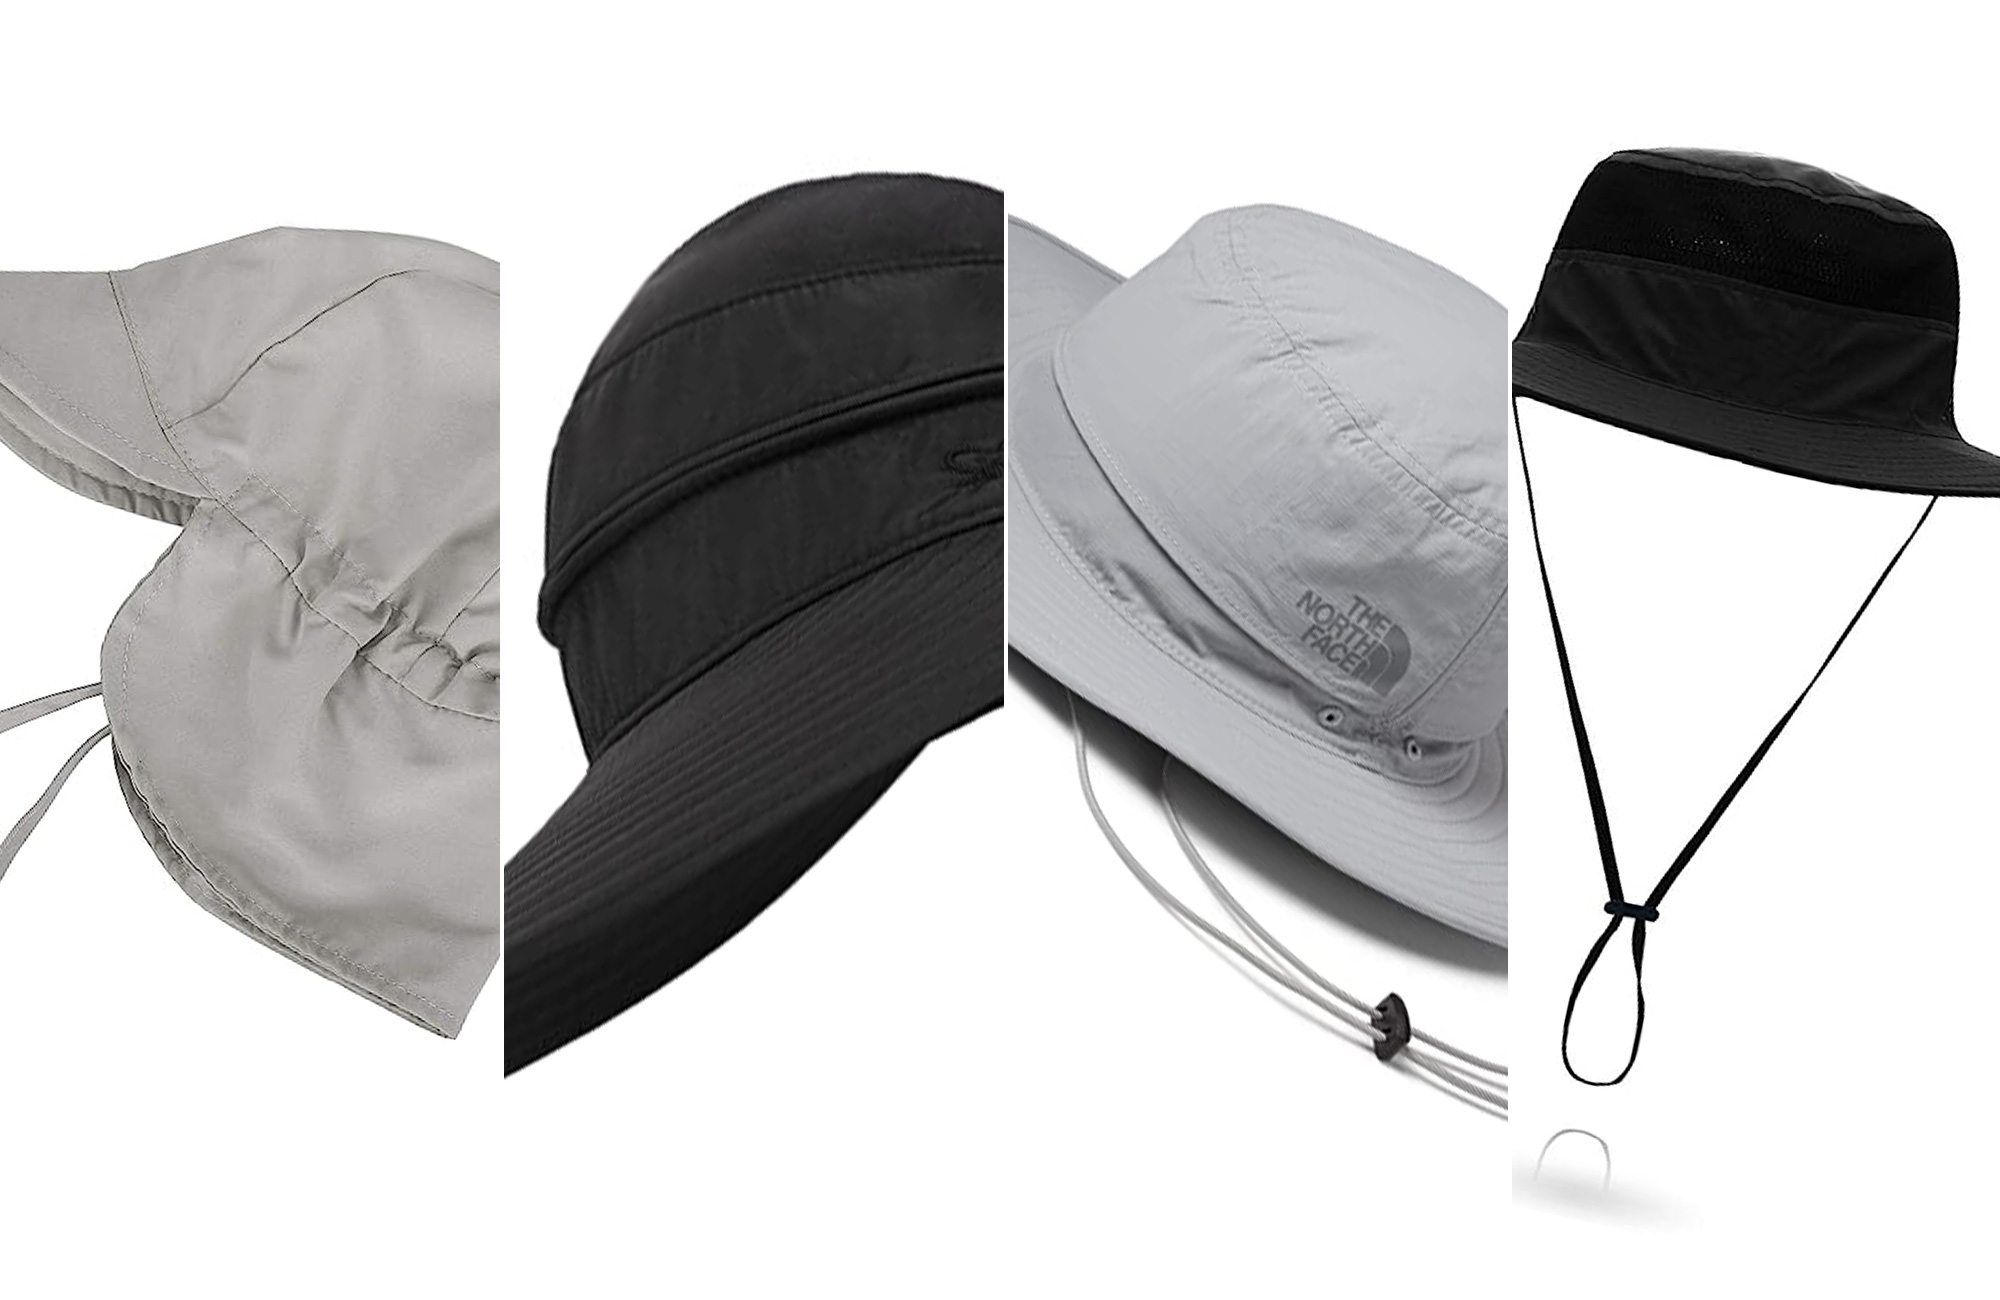 10 Best Packable Women's Sun Hats for Travel 2021